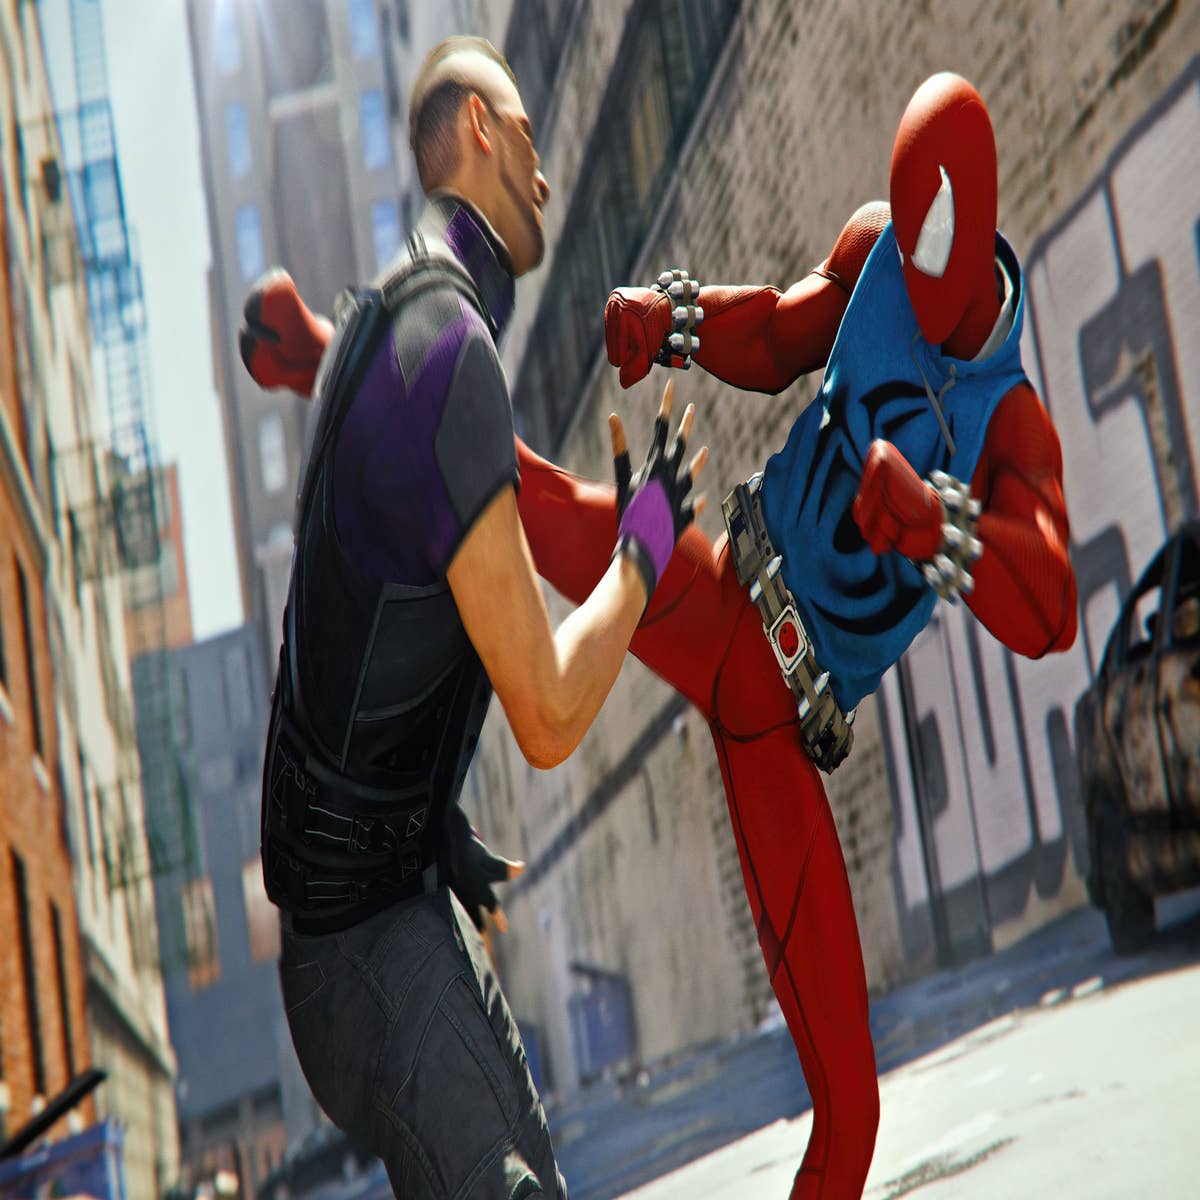 TT Poll #143: Marvel's Spider-Man (2018 video game)